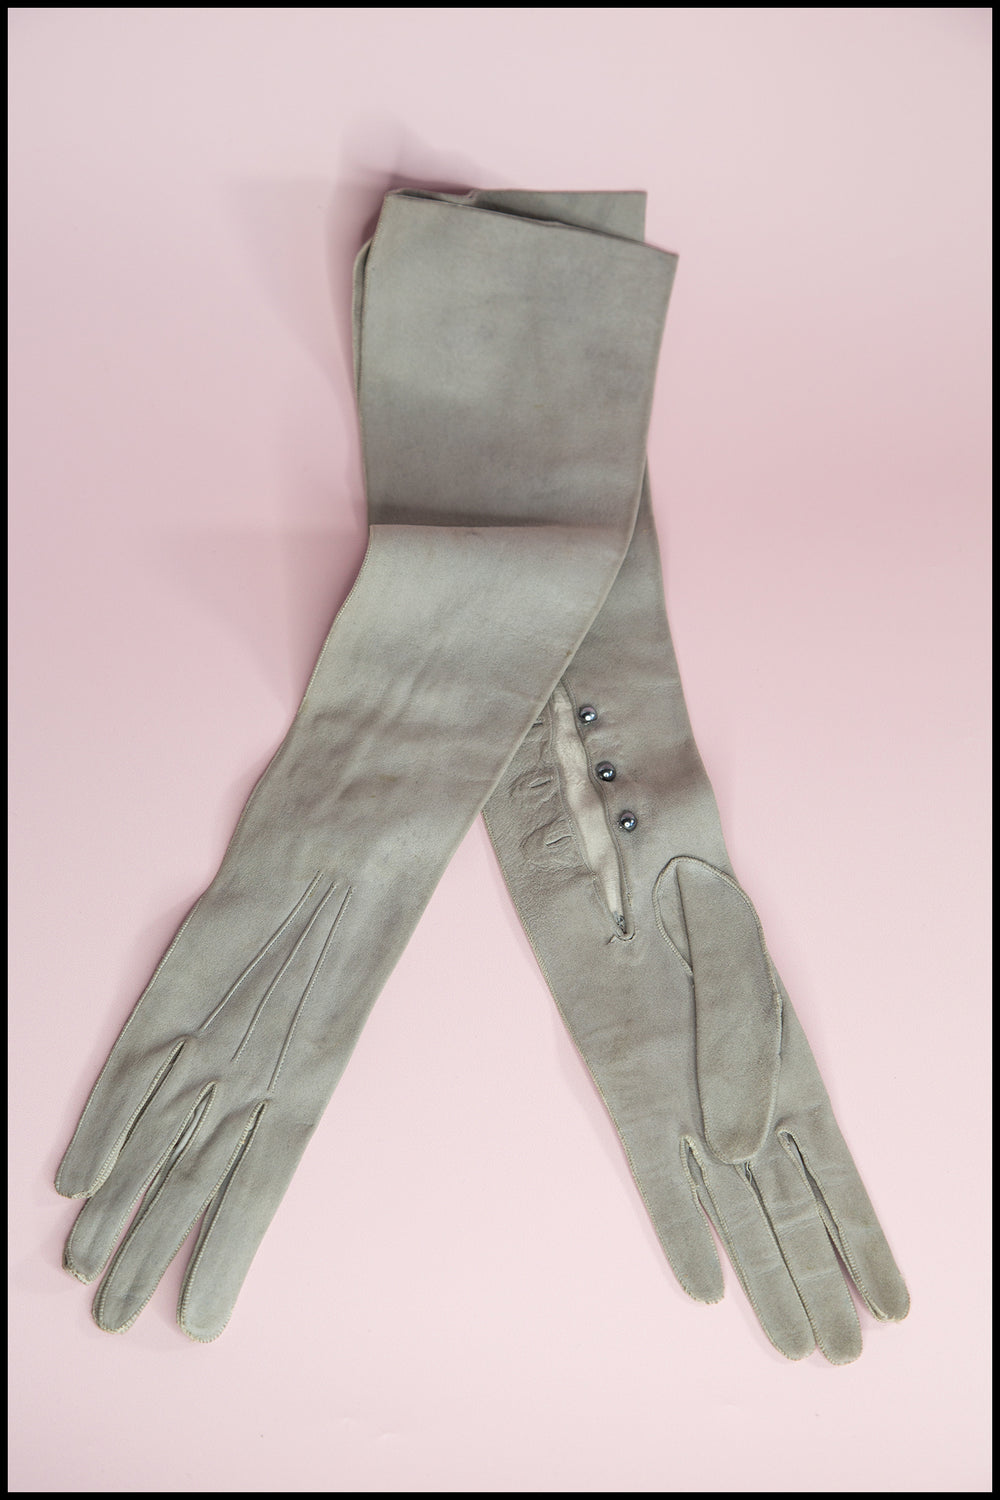 Vintage Gray Leather Gloves w/Wrist Strap #GA2053GY